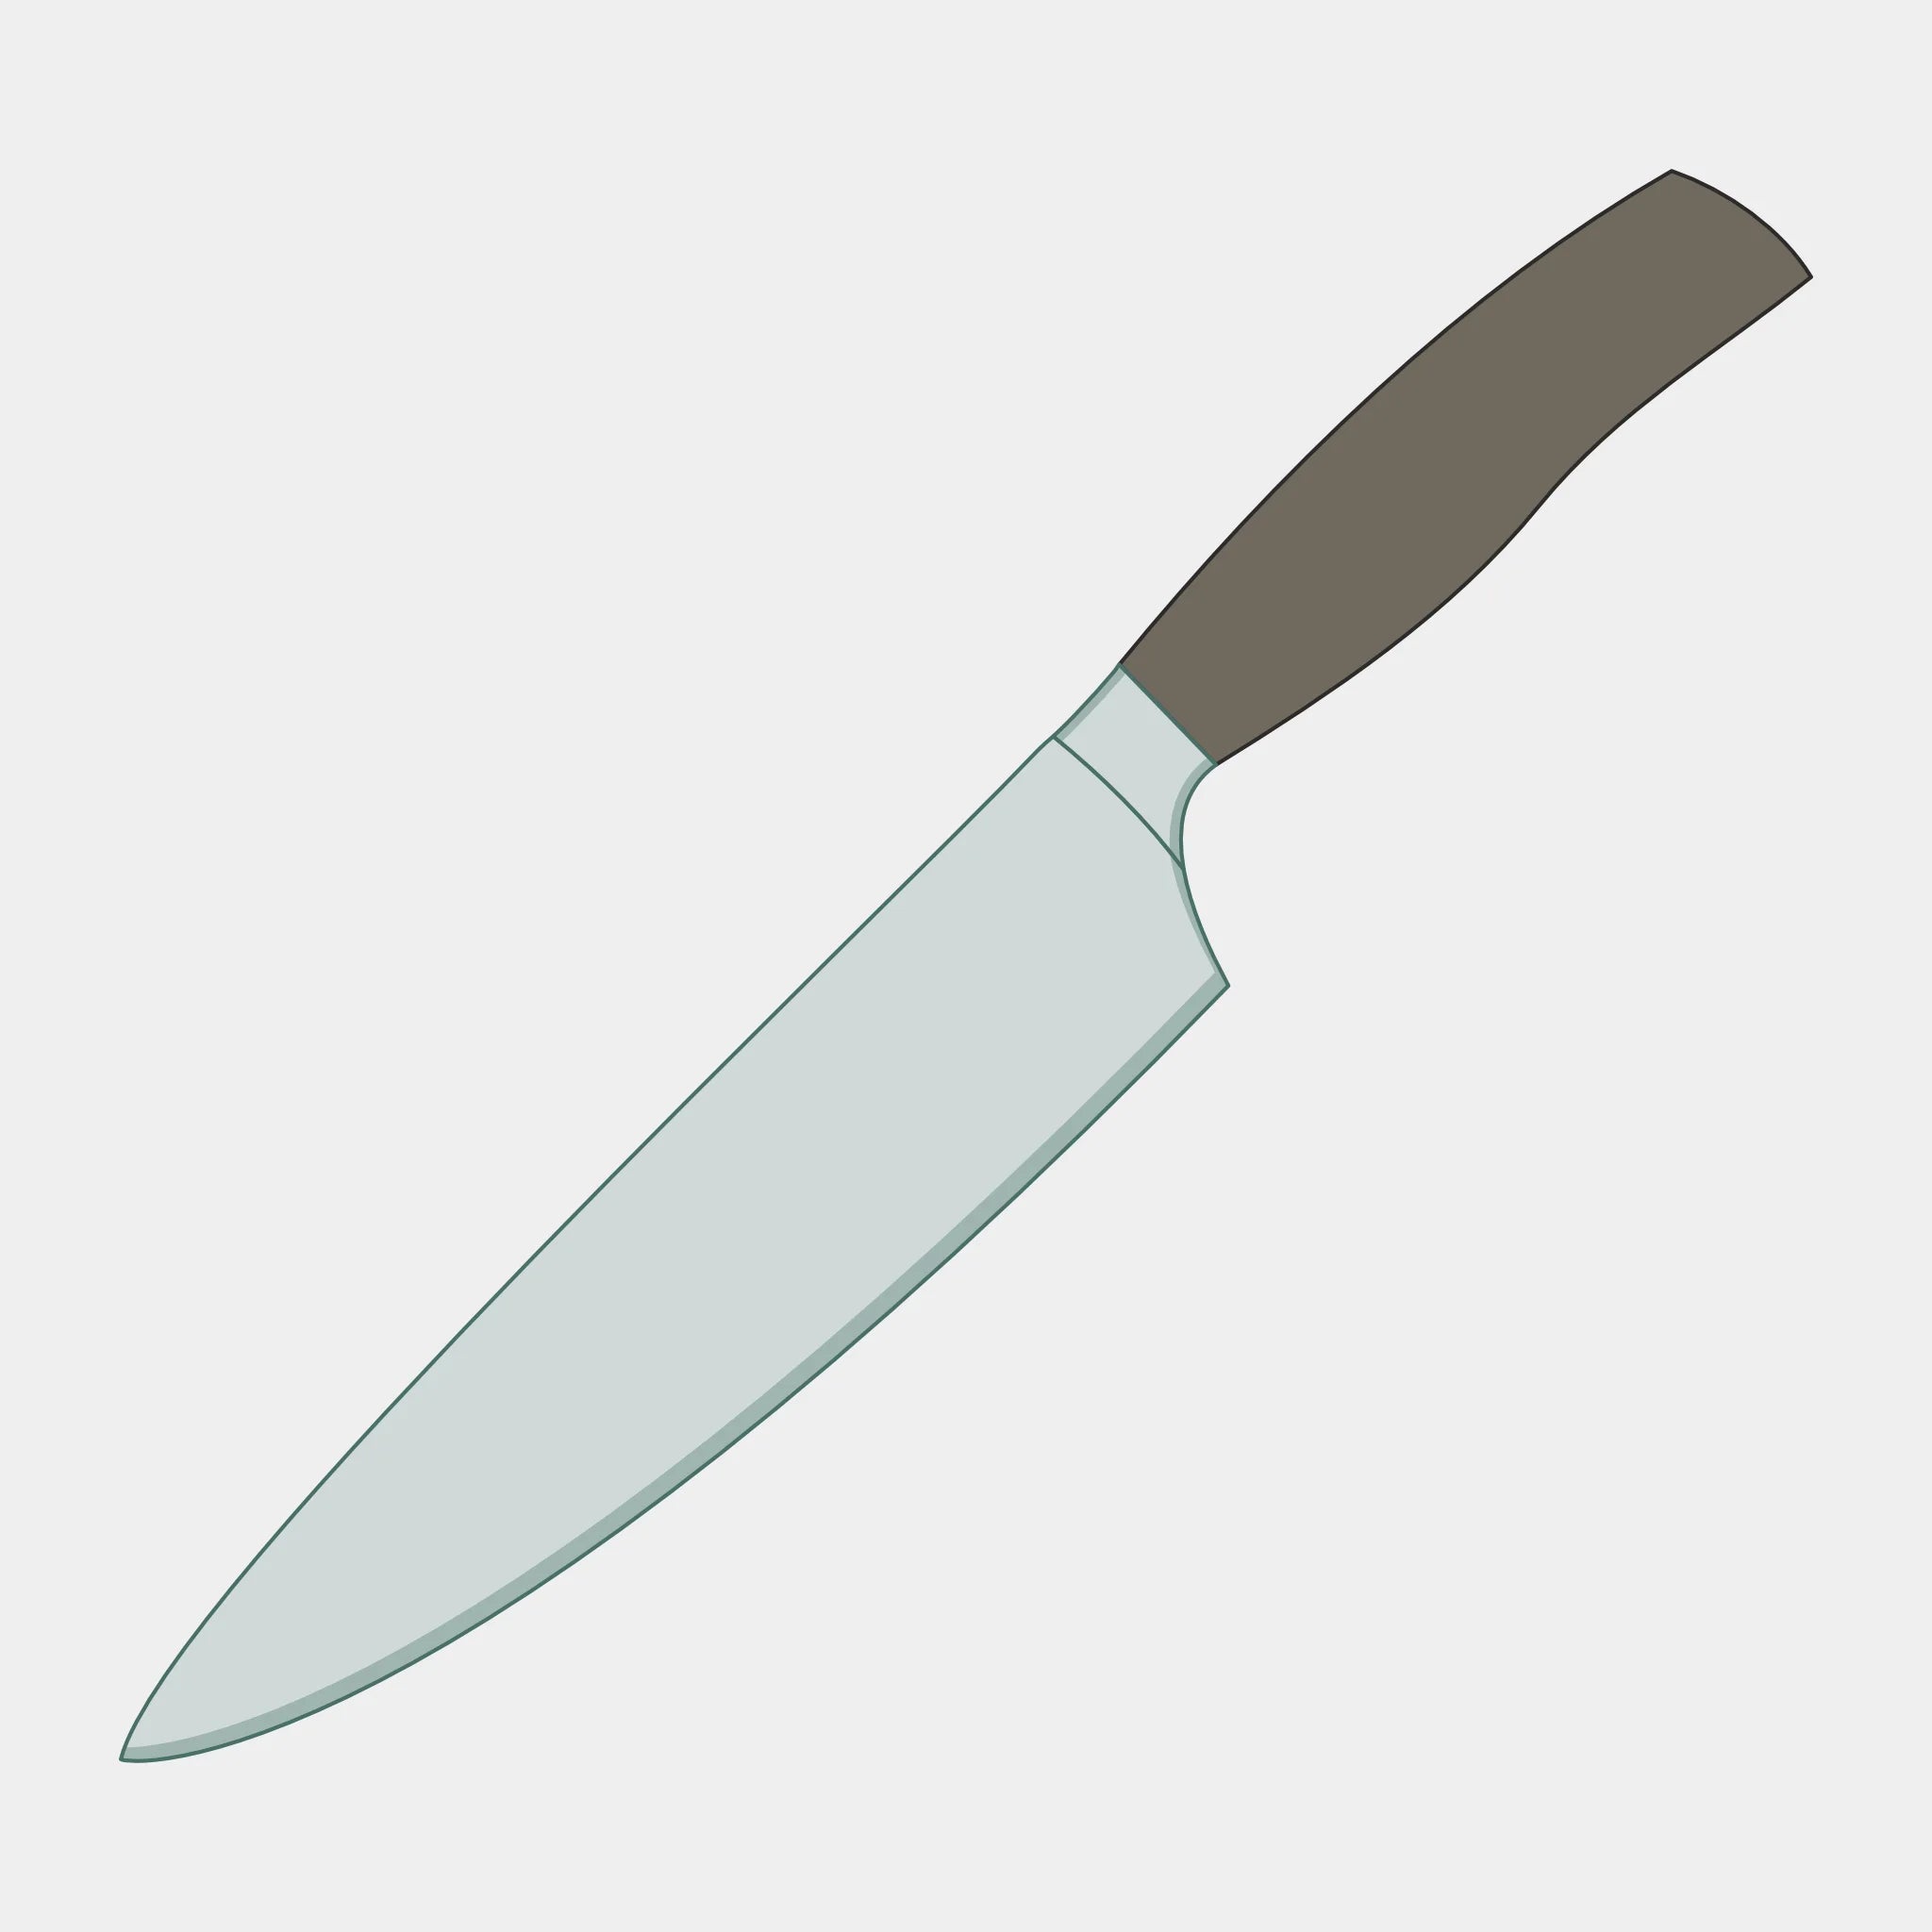 Langes Messer | Solinger Qualitätsschliff